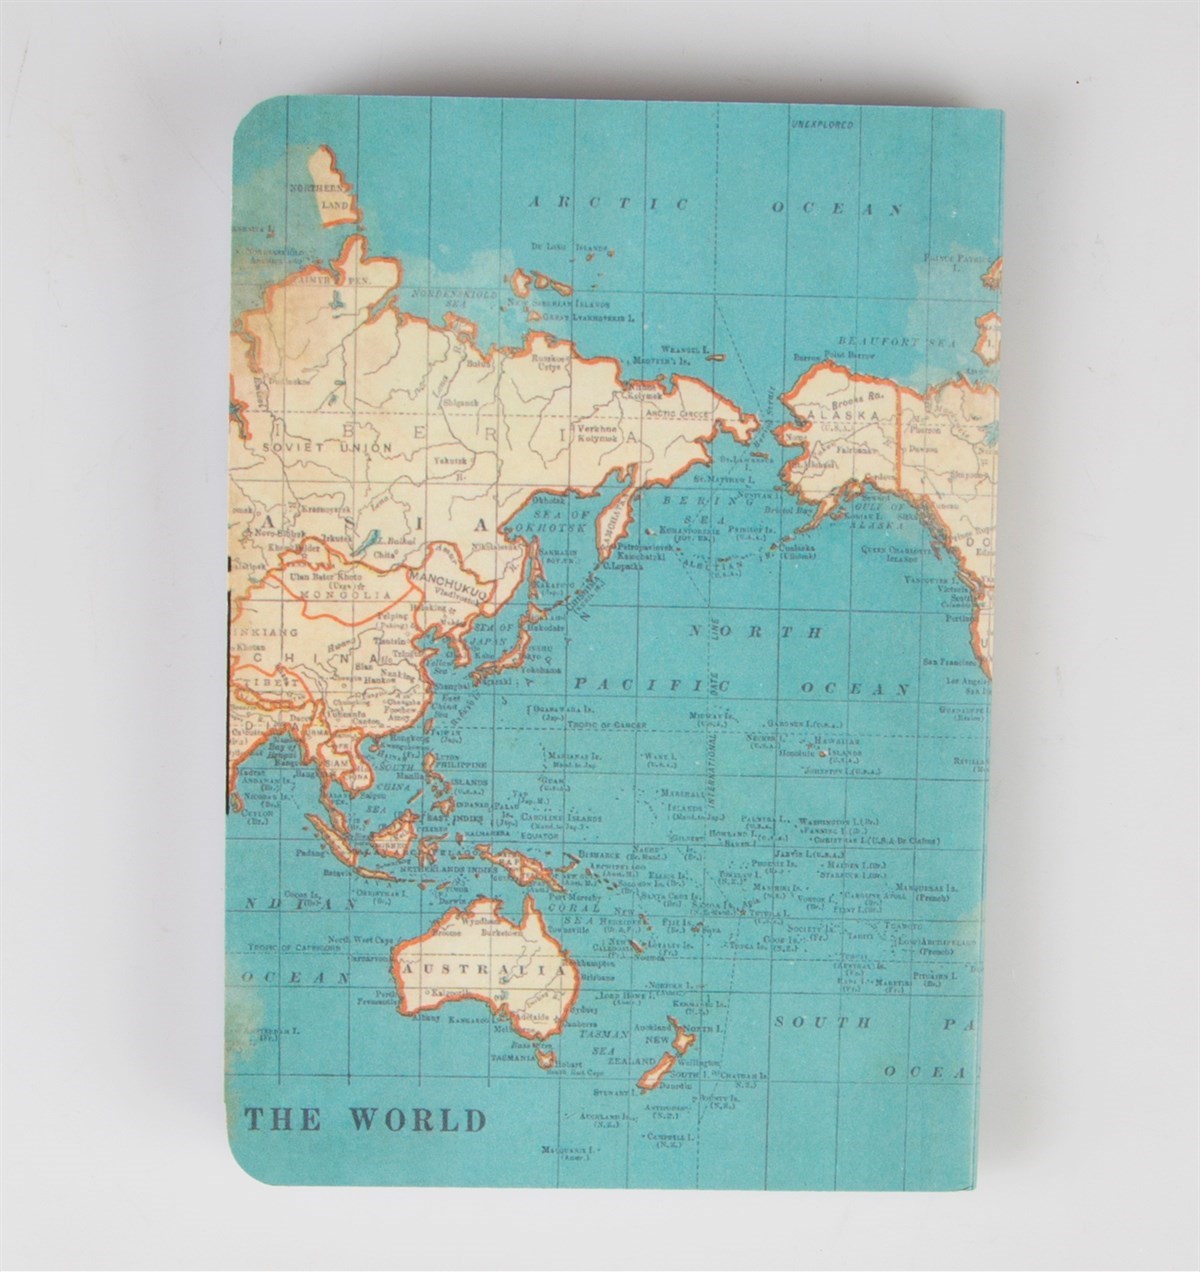 Sass & Belle 'Little Book for Big Ideas' Vintage World Map Mini Notebook | Journal - SweetpeaStore